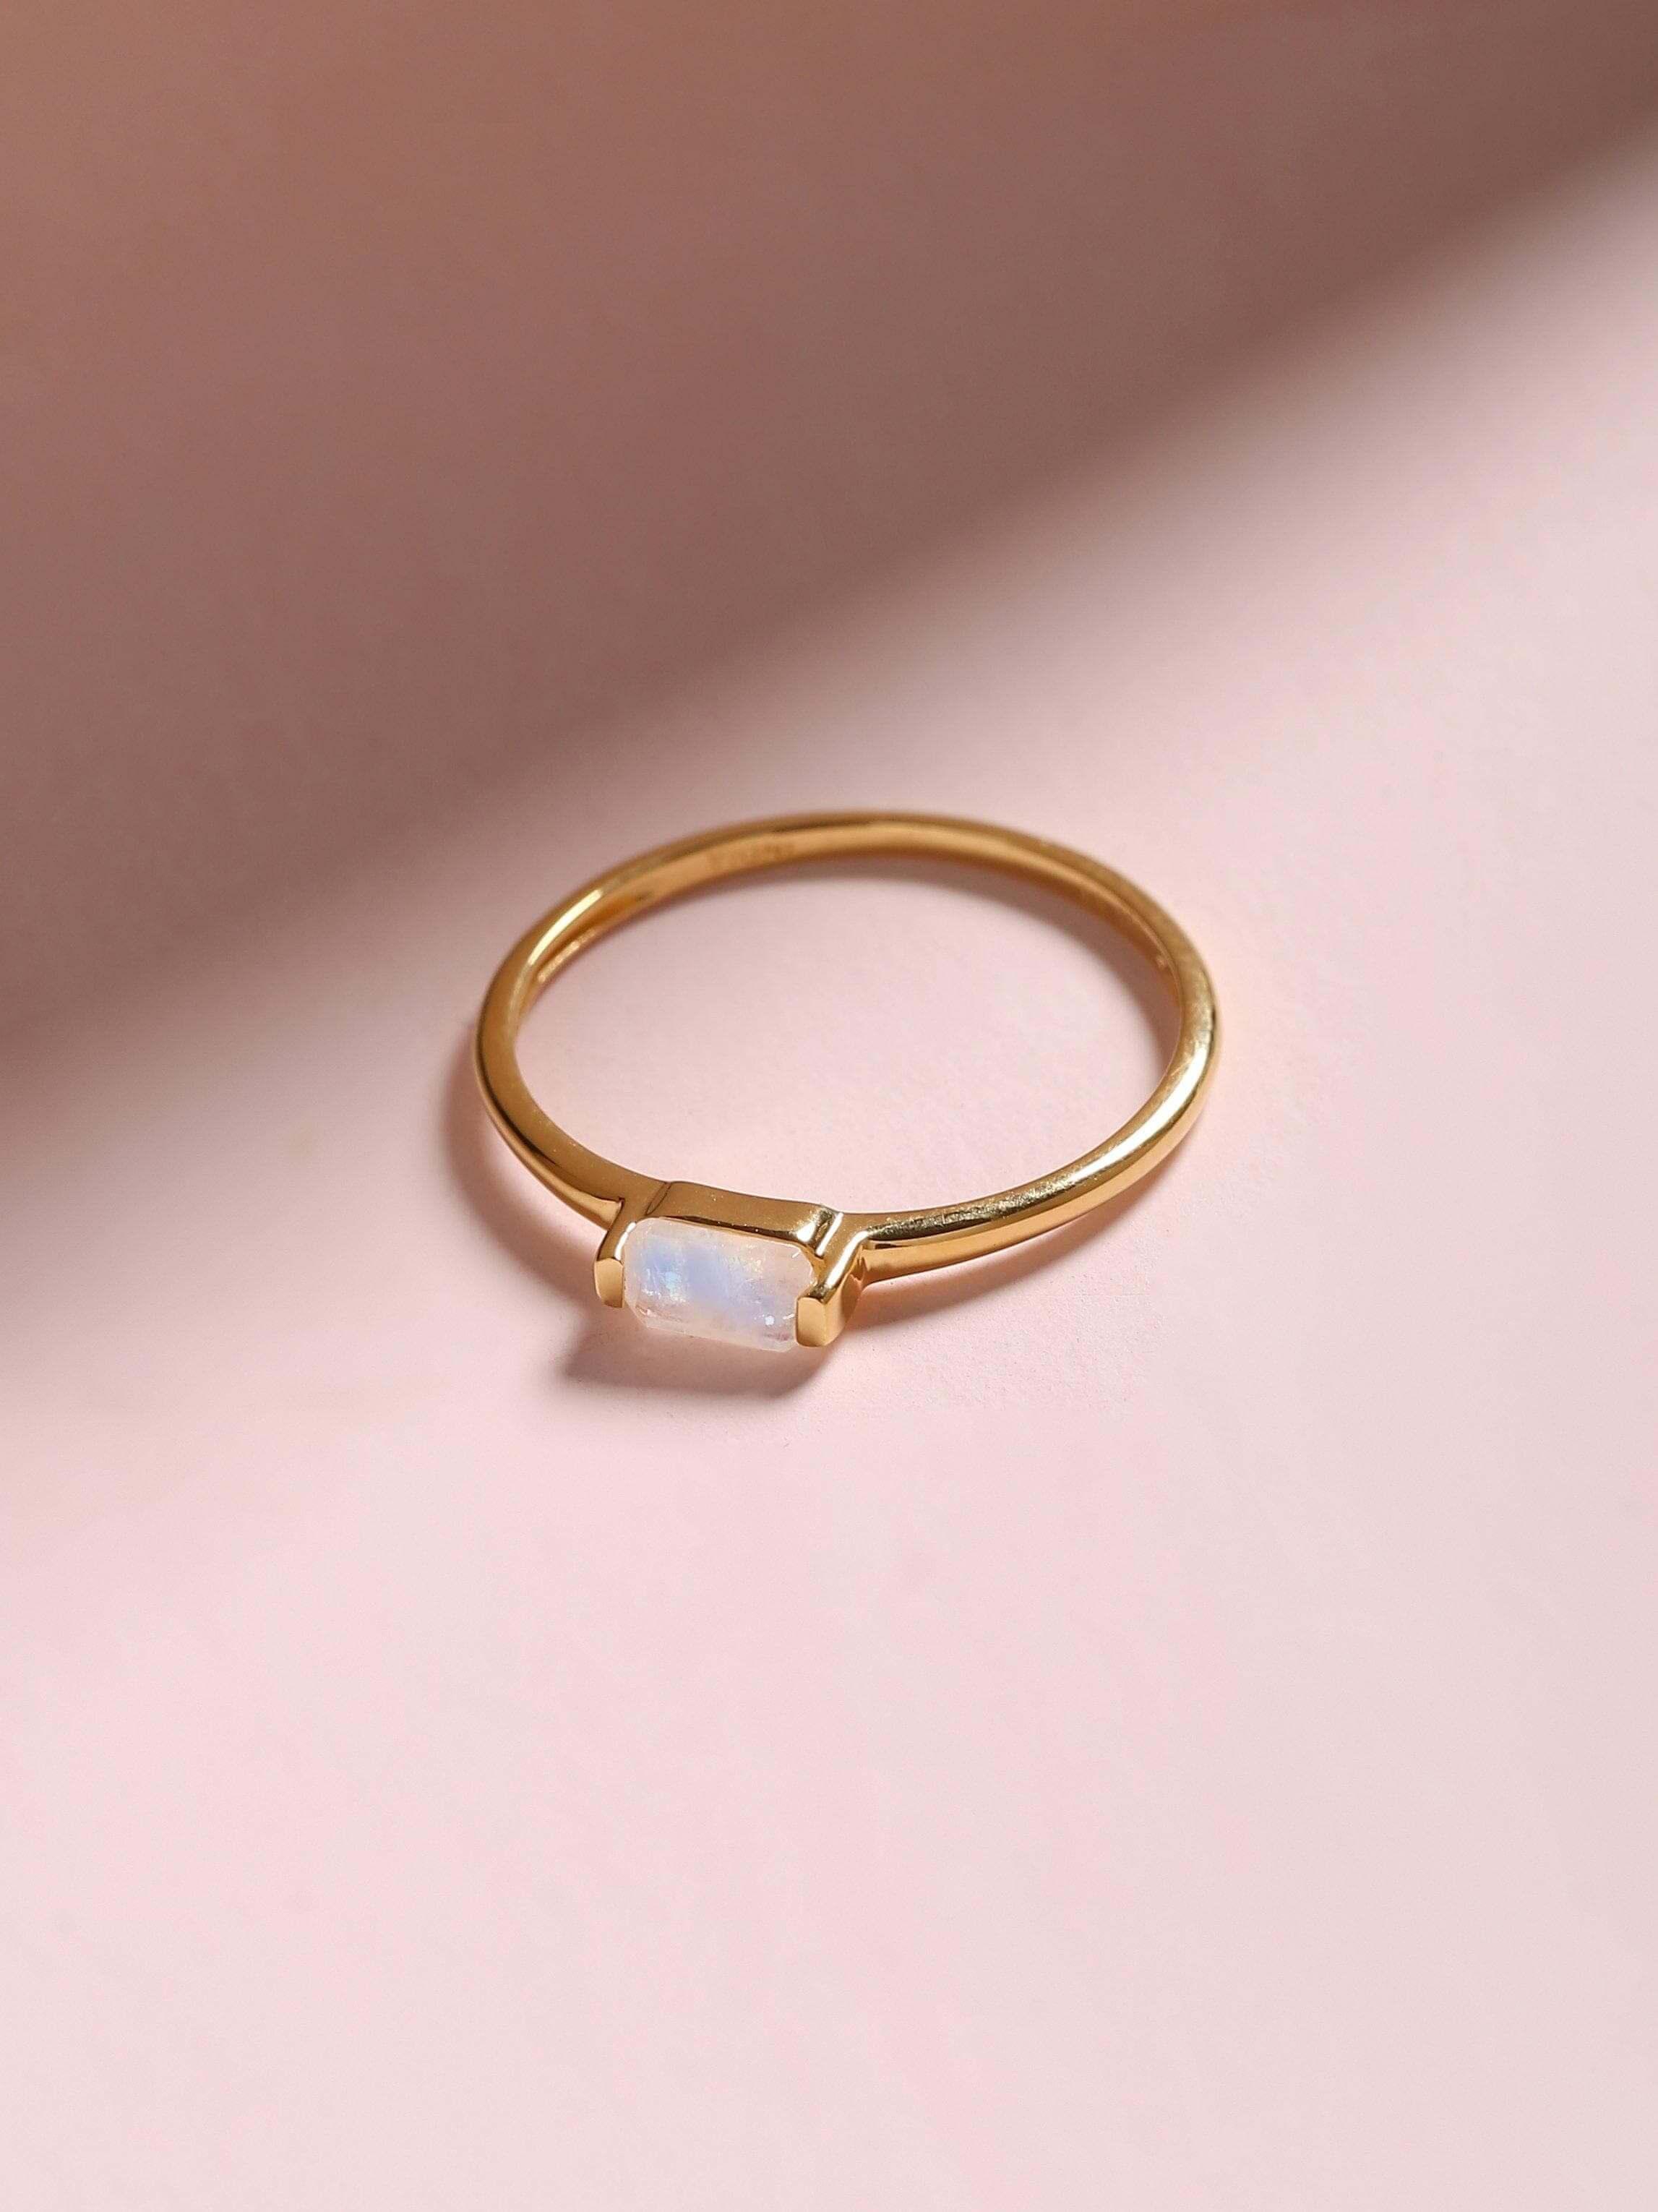 0.26 Ct Rainbow Moonstone Solid 10k Yellow Gold Ring Jewelry - YoTreasure